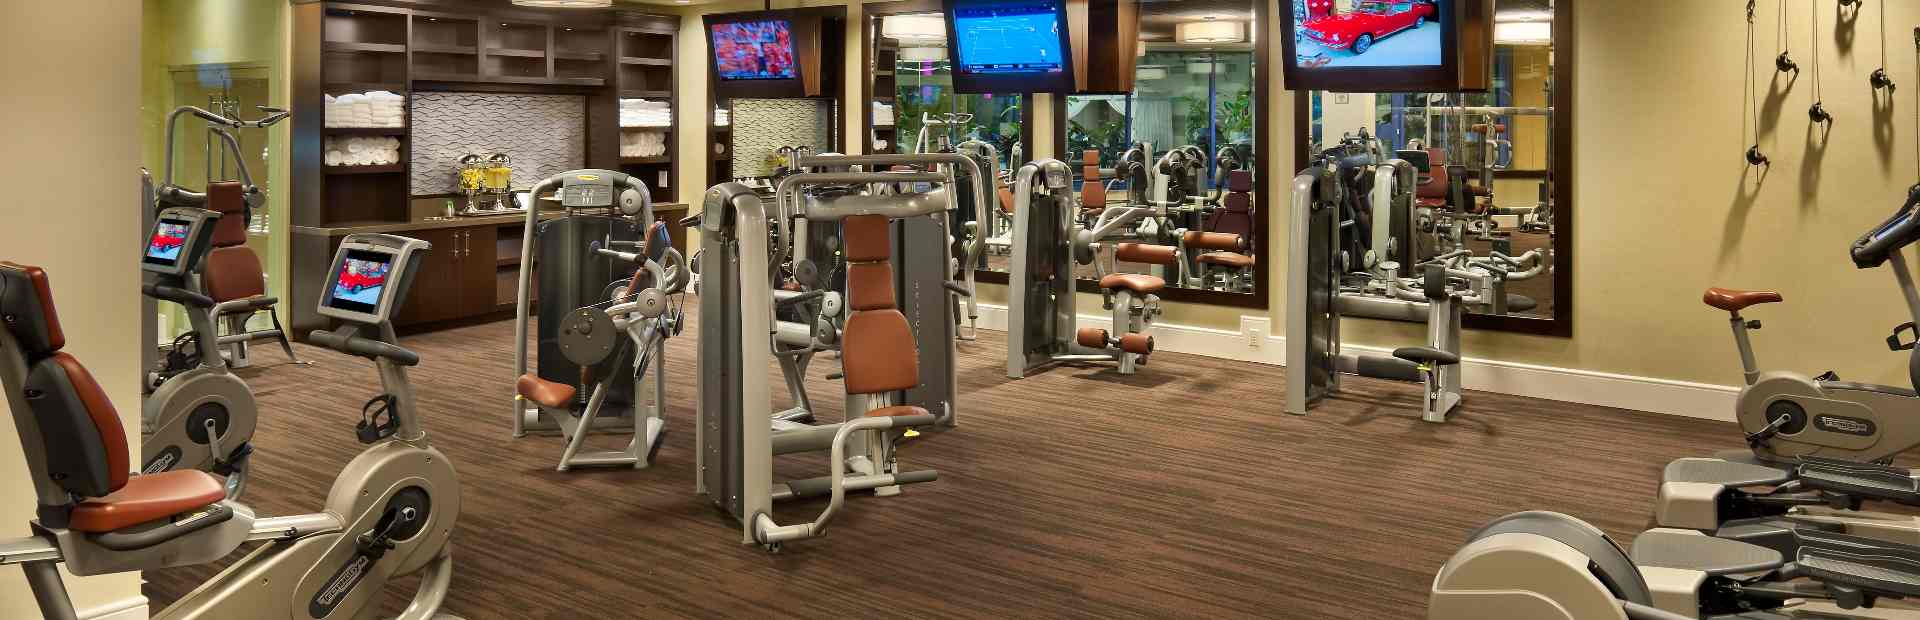 Fitness Center at Spa Atlantis